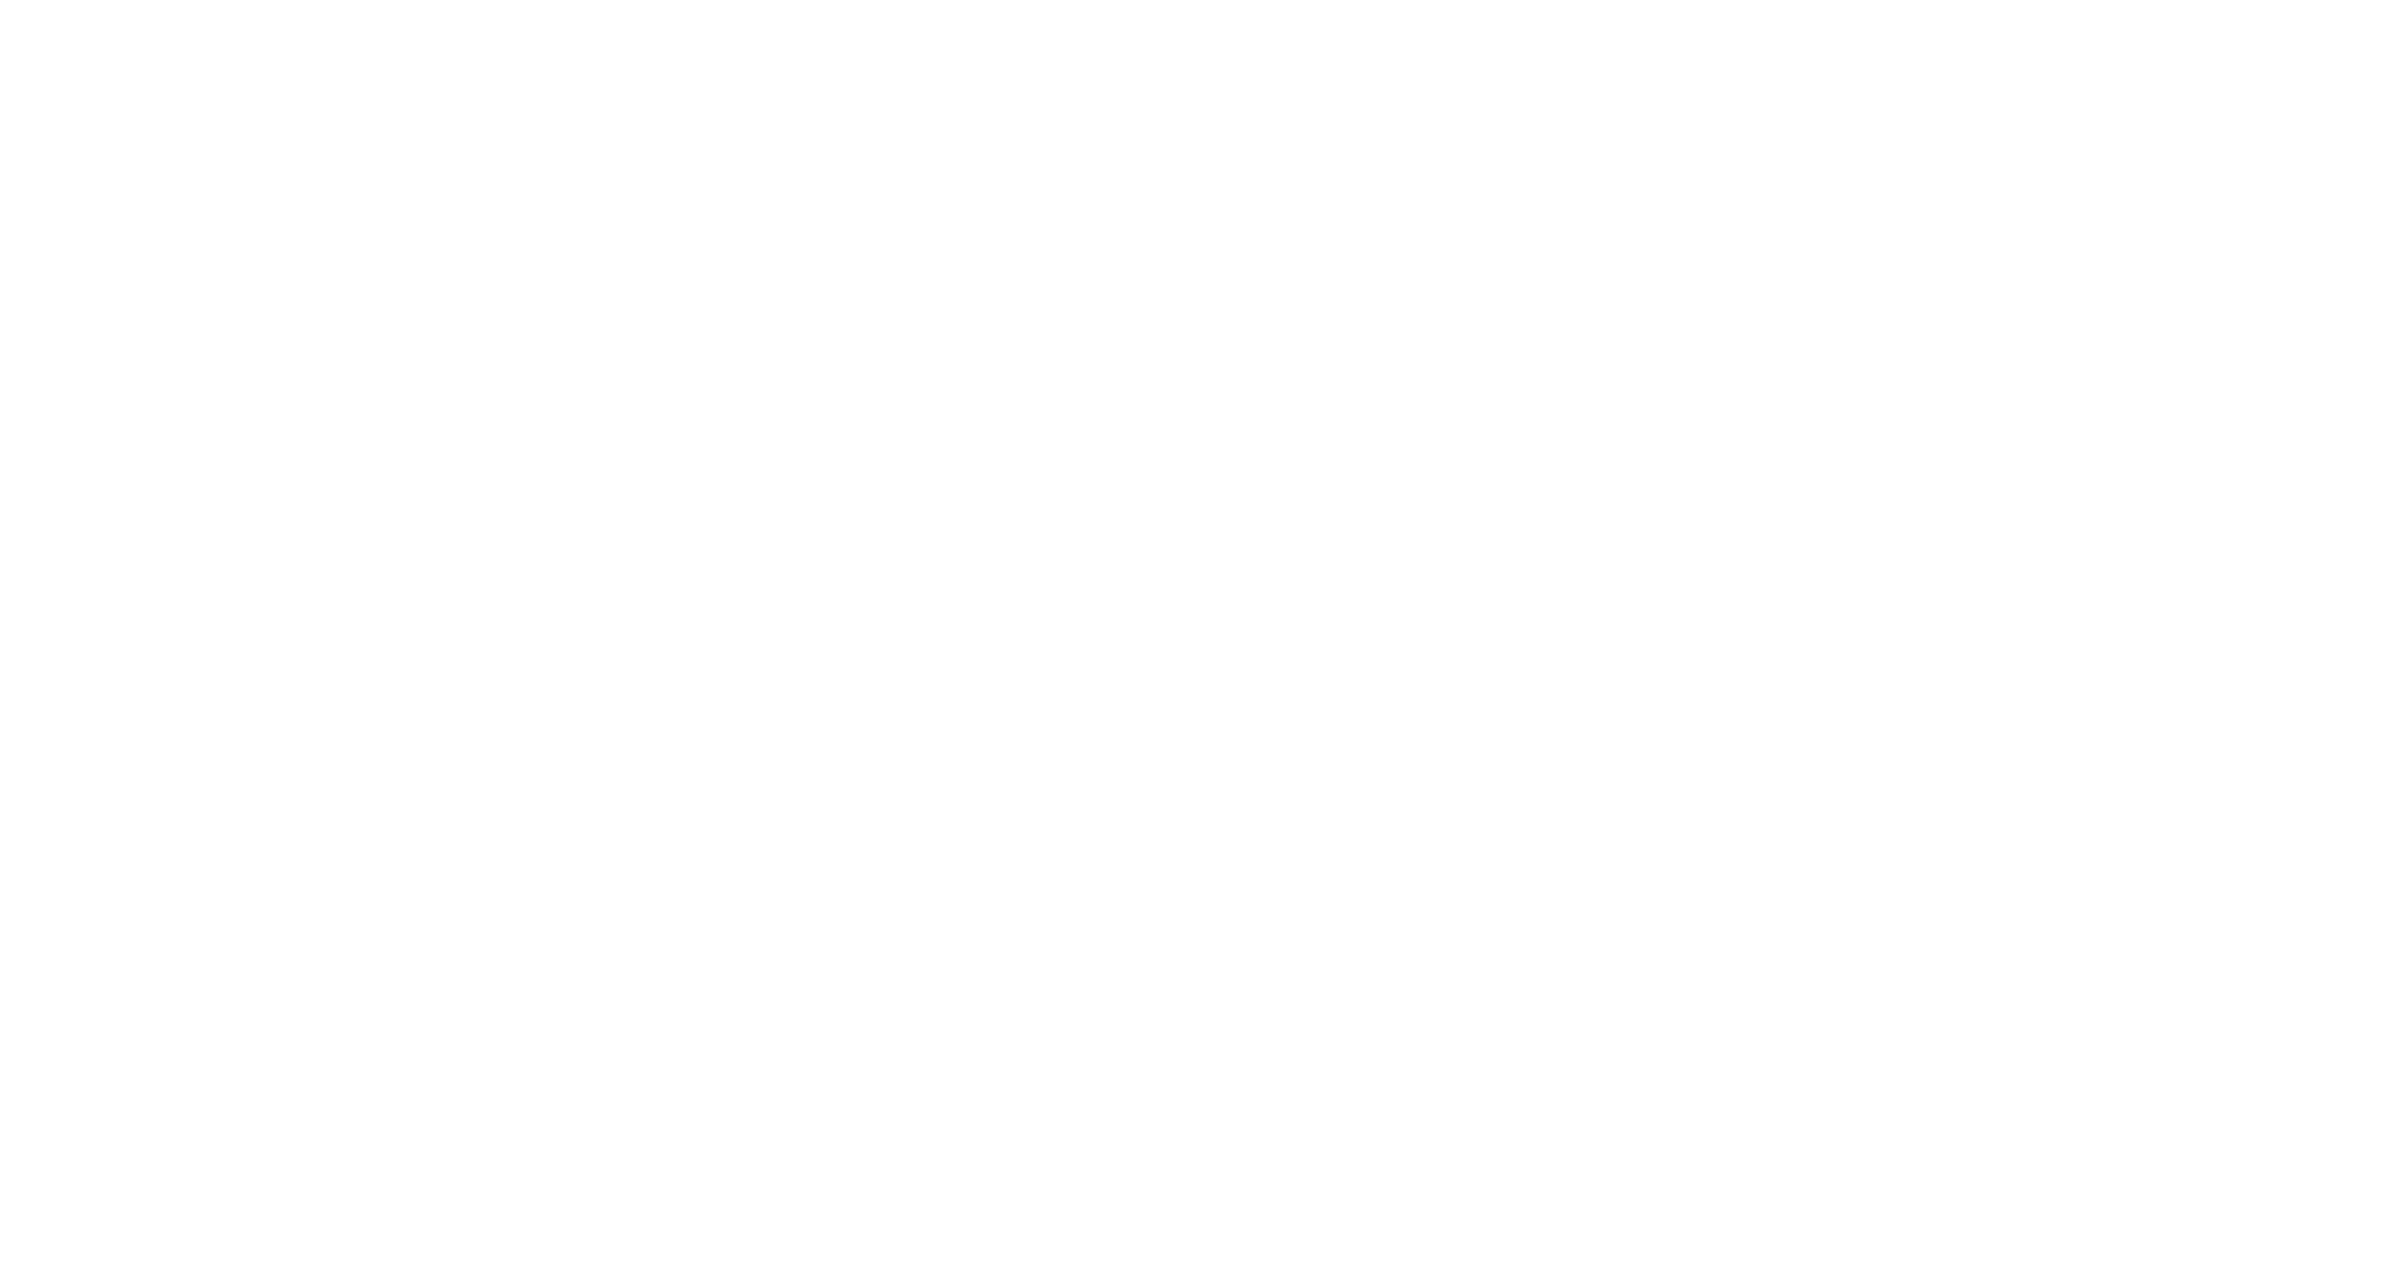 Blu Ray Png Logo Download Free Transparent Png Logos - vrogue.co